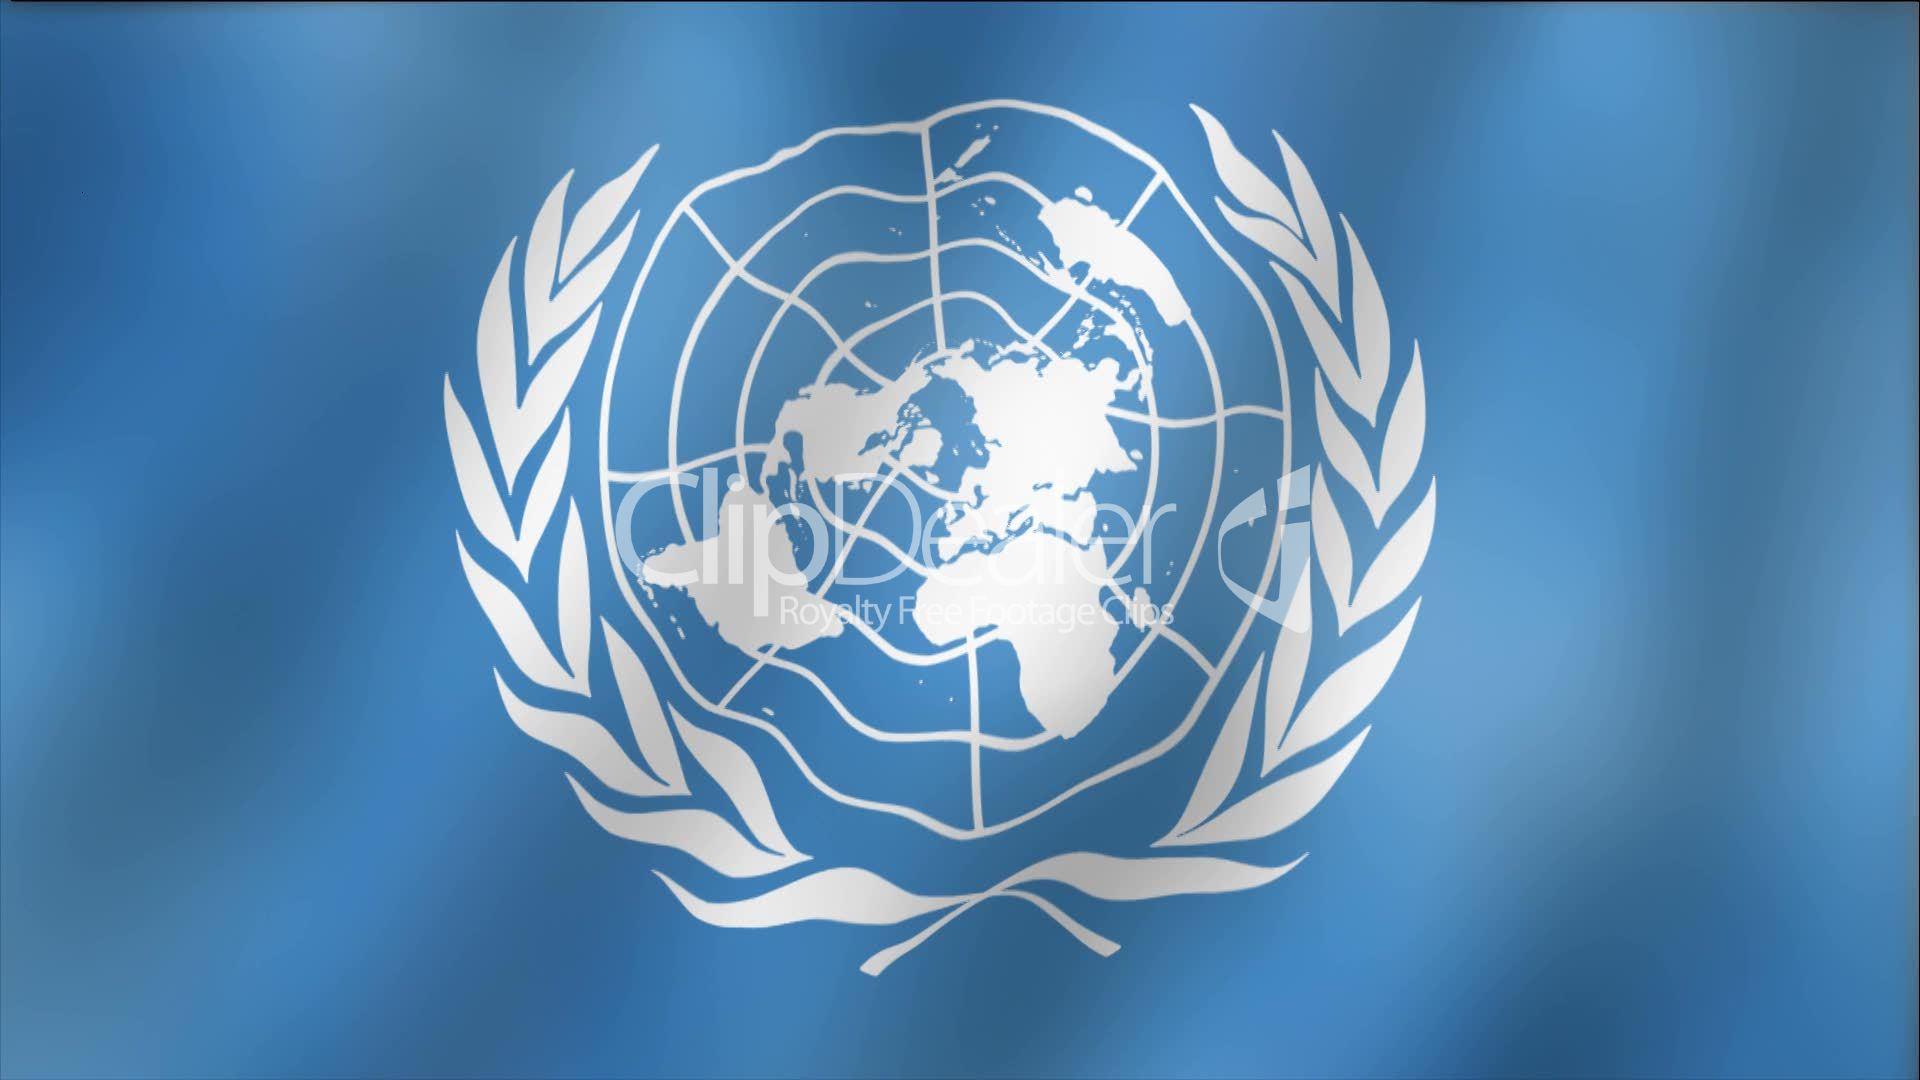 Оон в качестве. Логотип ООН United Nations. Флаг организации Объединенных наций. Совет безопасности ООН лого. Флаг ООН 1995.